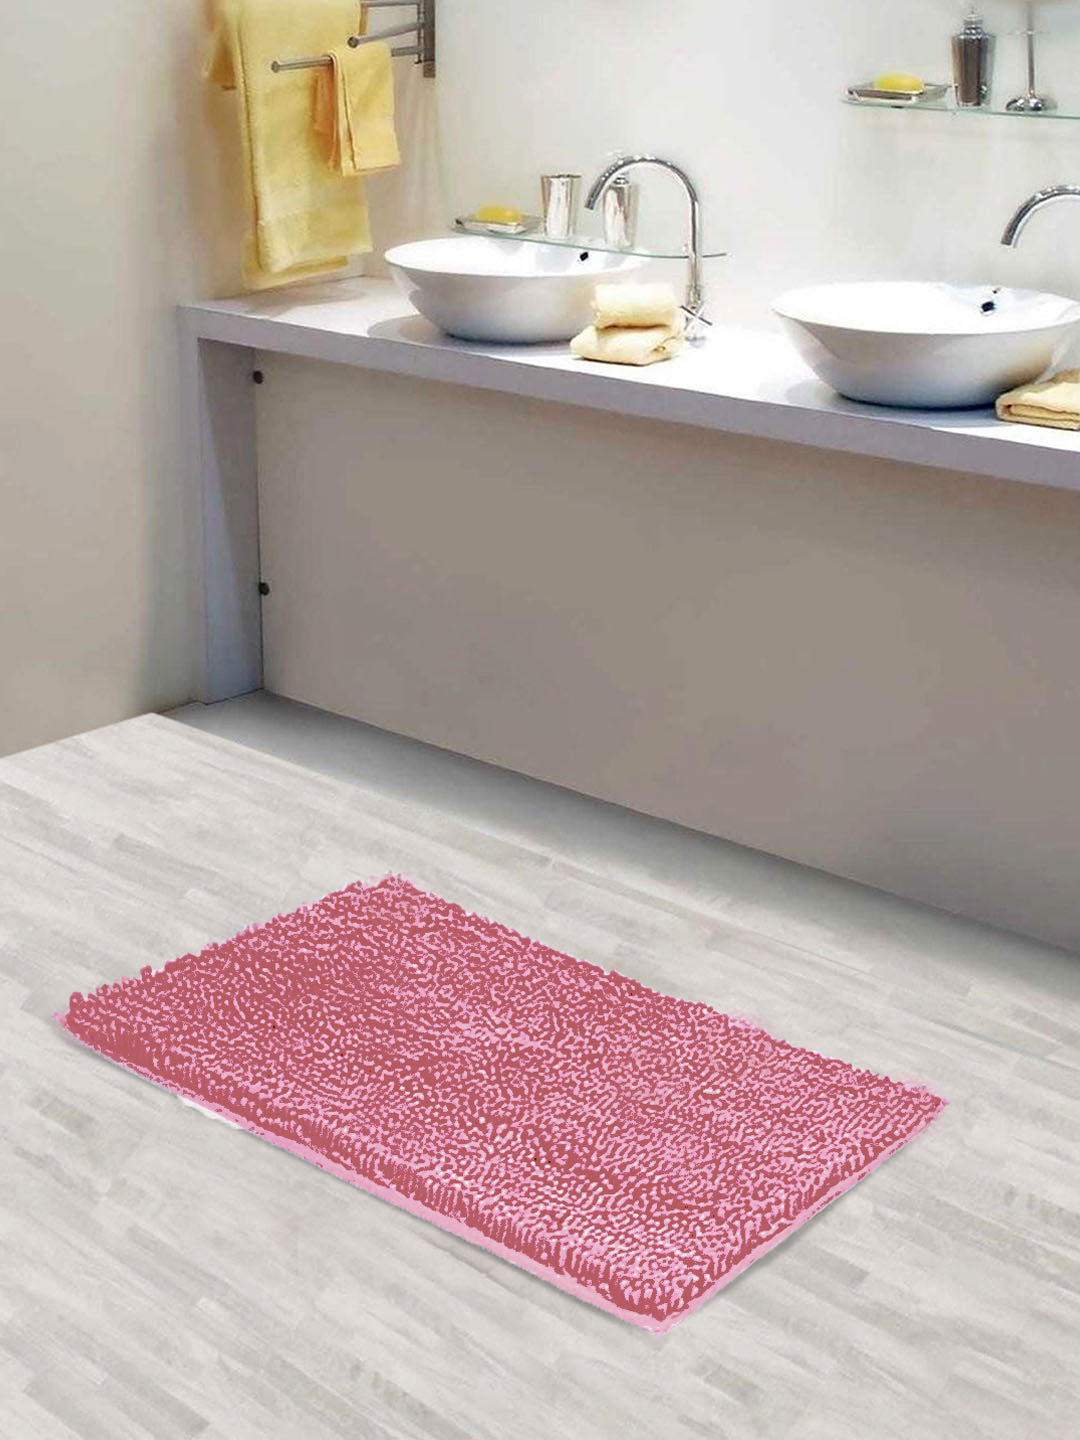 Lushomes Bathroom Mat, floor mats for home, anti slip mat, non slip mat, 1800 GSM Floor Mat with High Pile Microfiber, anti skid mat for bathroom floor (12 x 18 Inch, Single Pc, Pink)